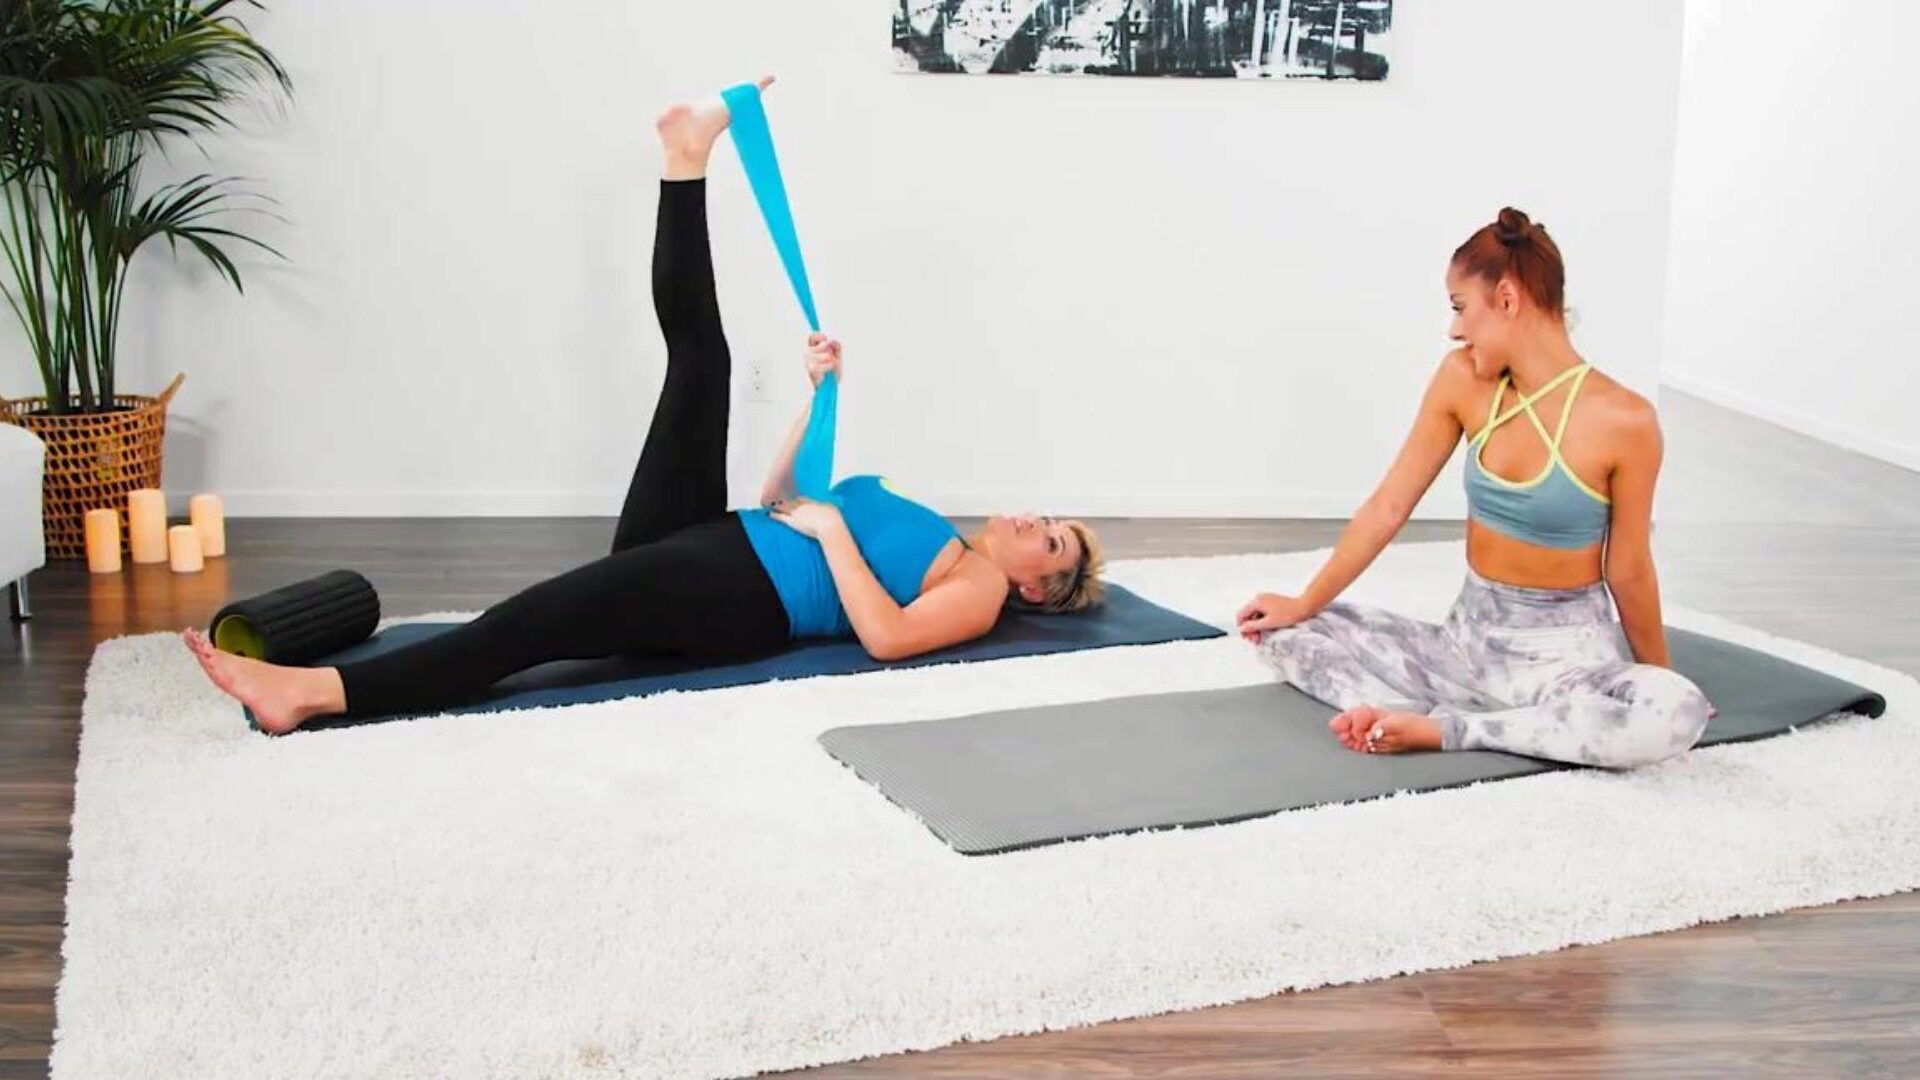 MommysGirl Vanna Bardot has a Hardcore Fingering Yoga Training with Hot MILF Ryan Keely